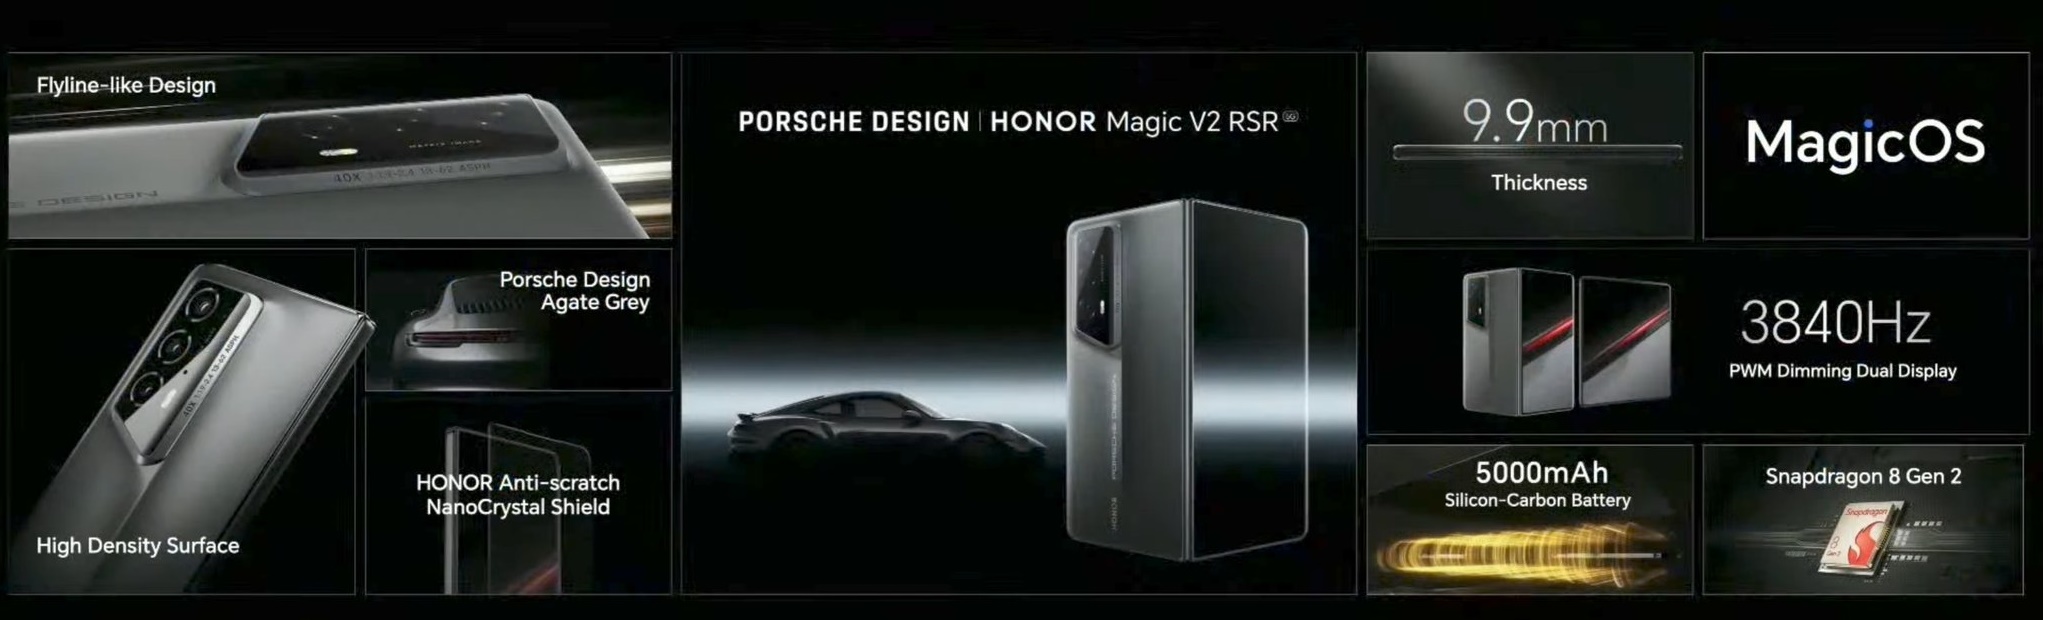 смартфон Honor Magic V2 RSR Porsche Design